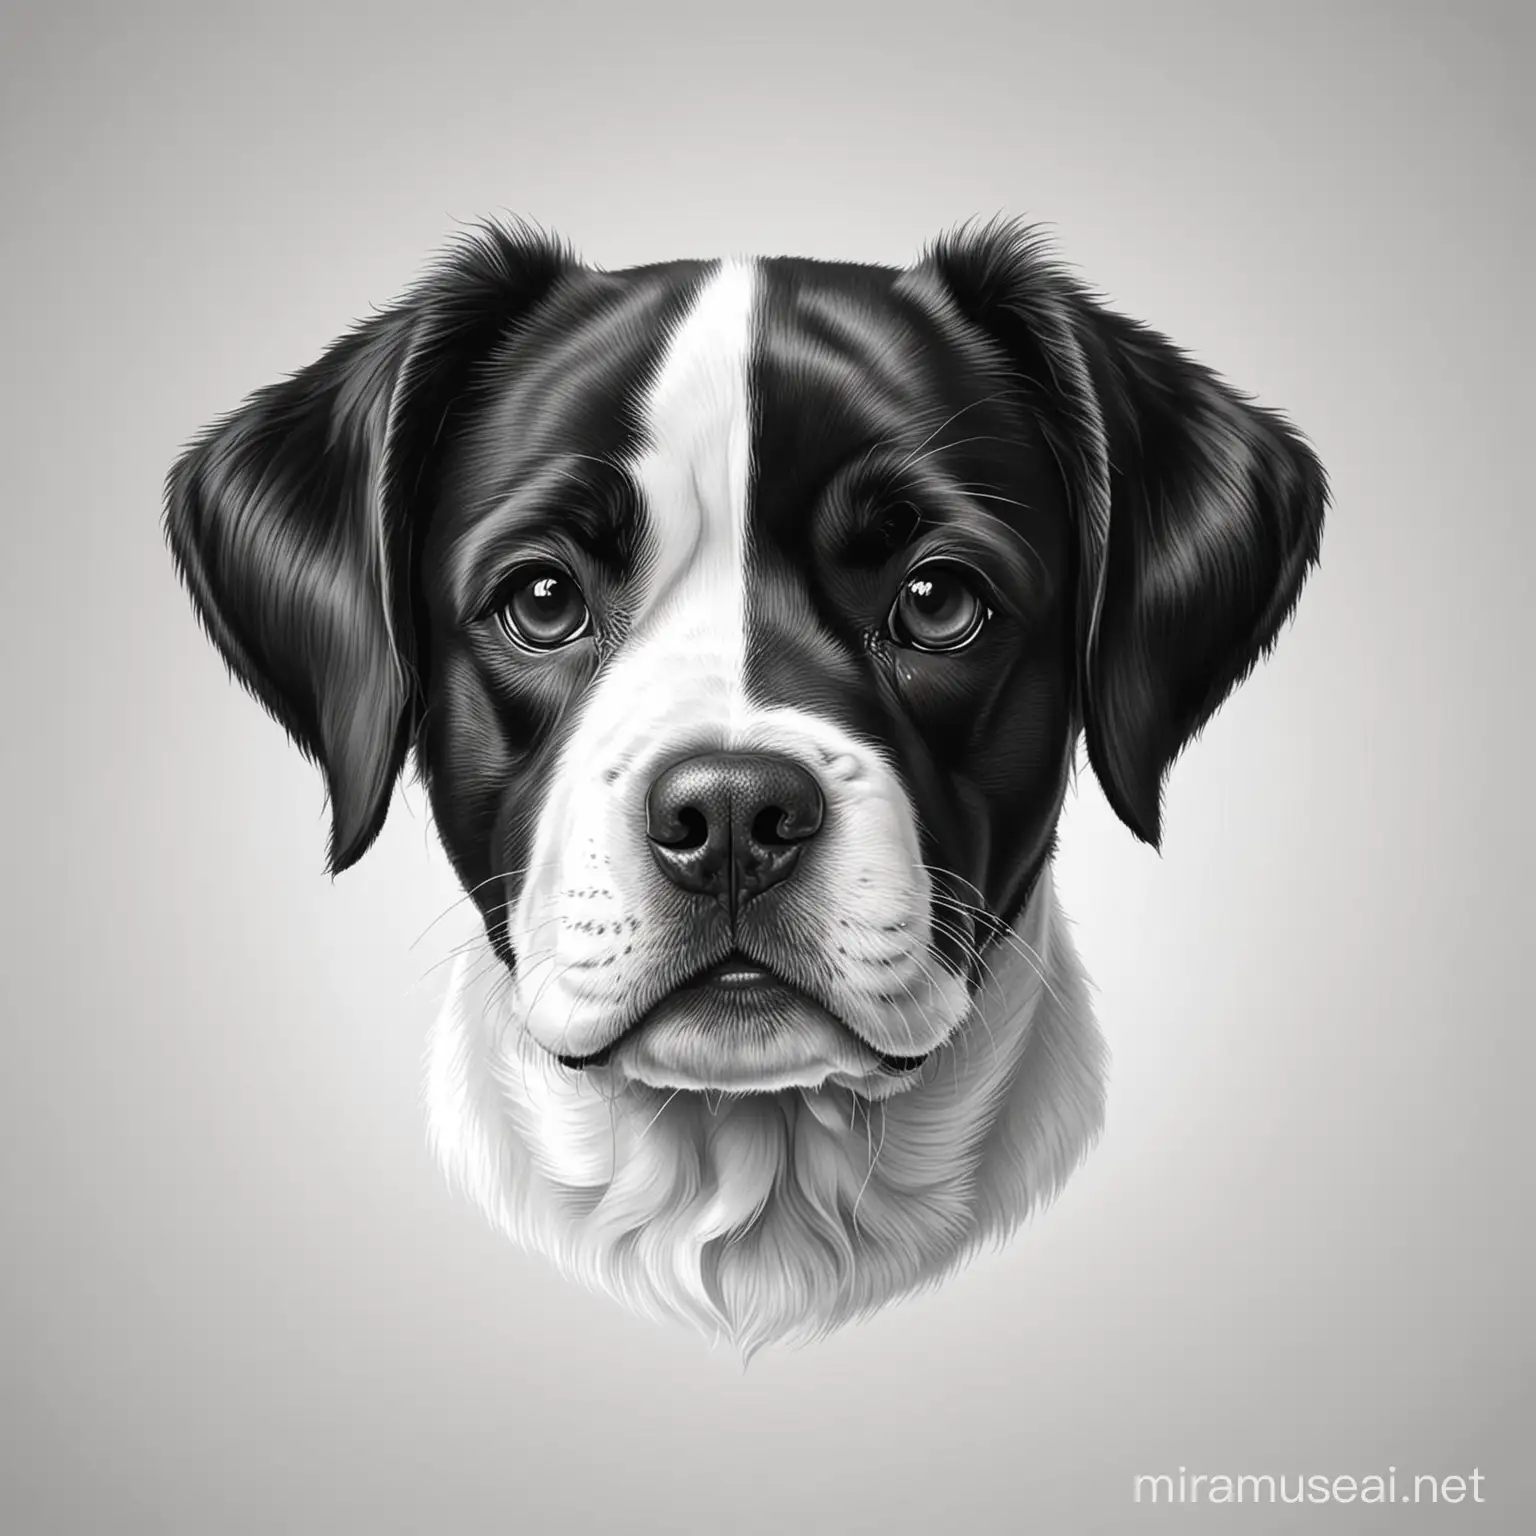 Black and White Dog Face Vector Illustration on White Background